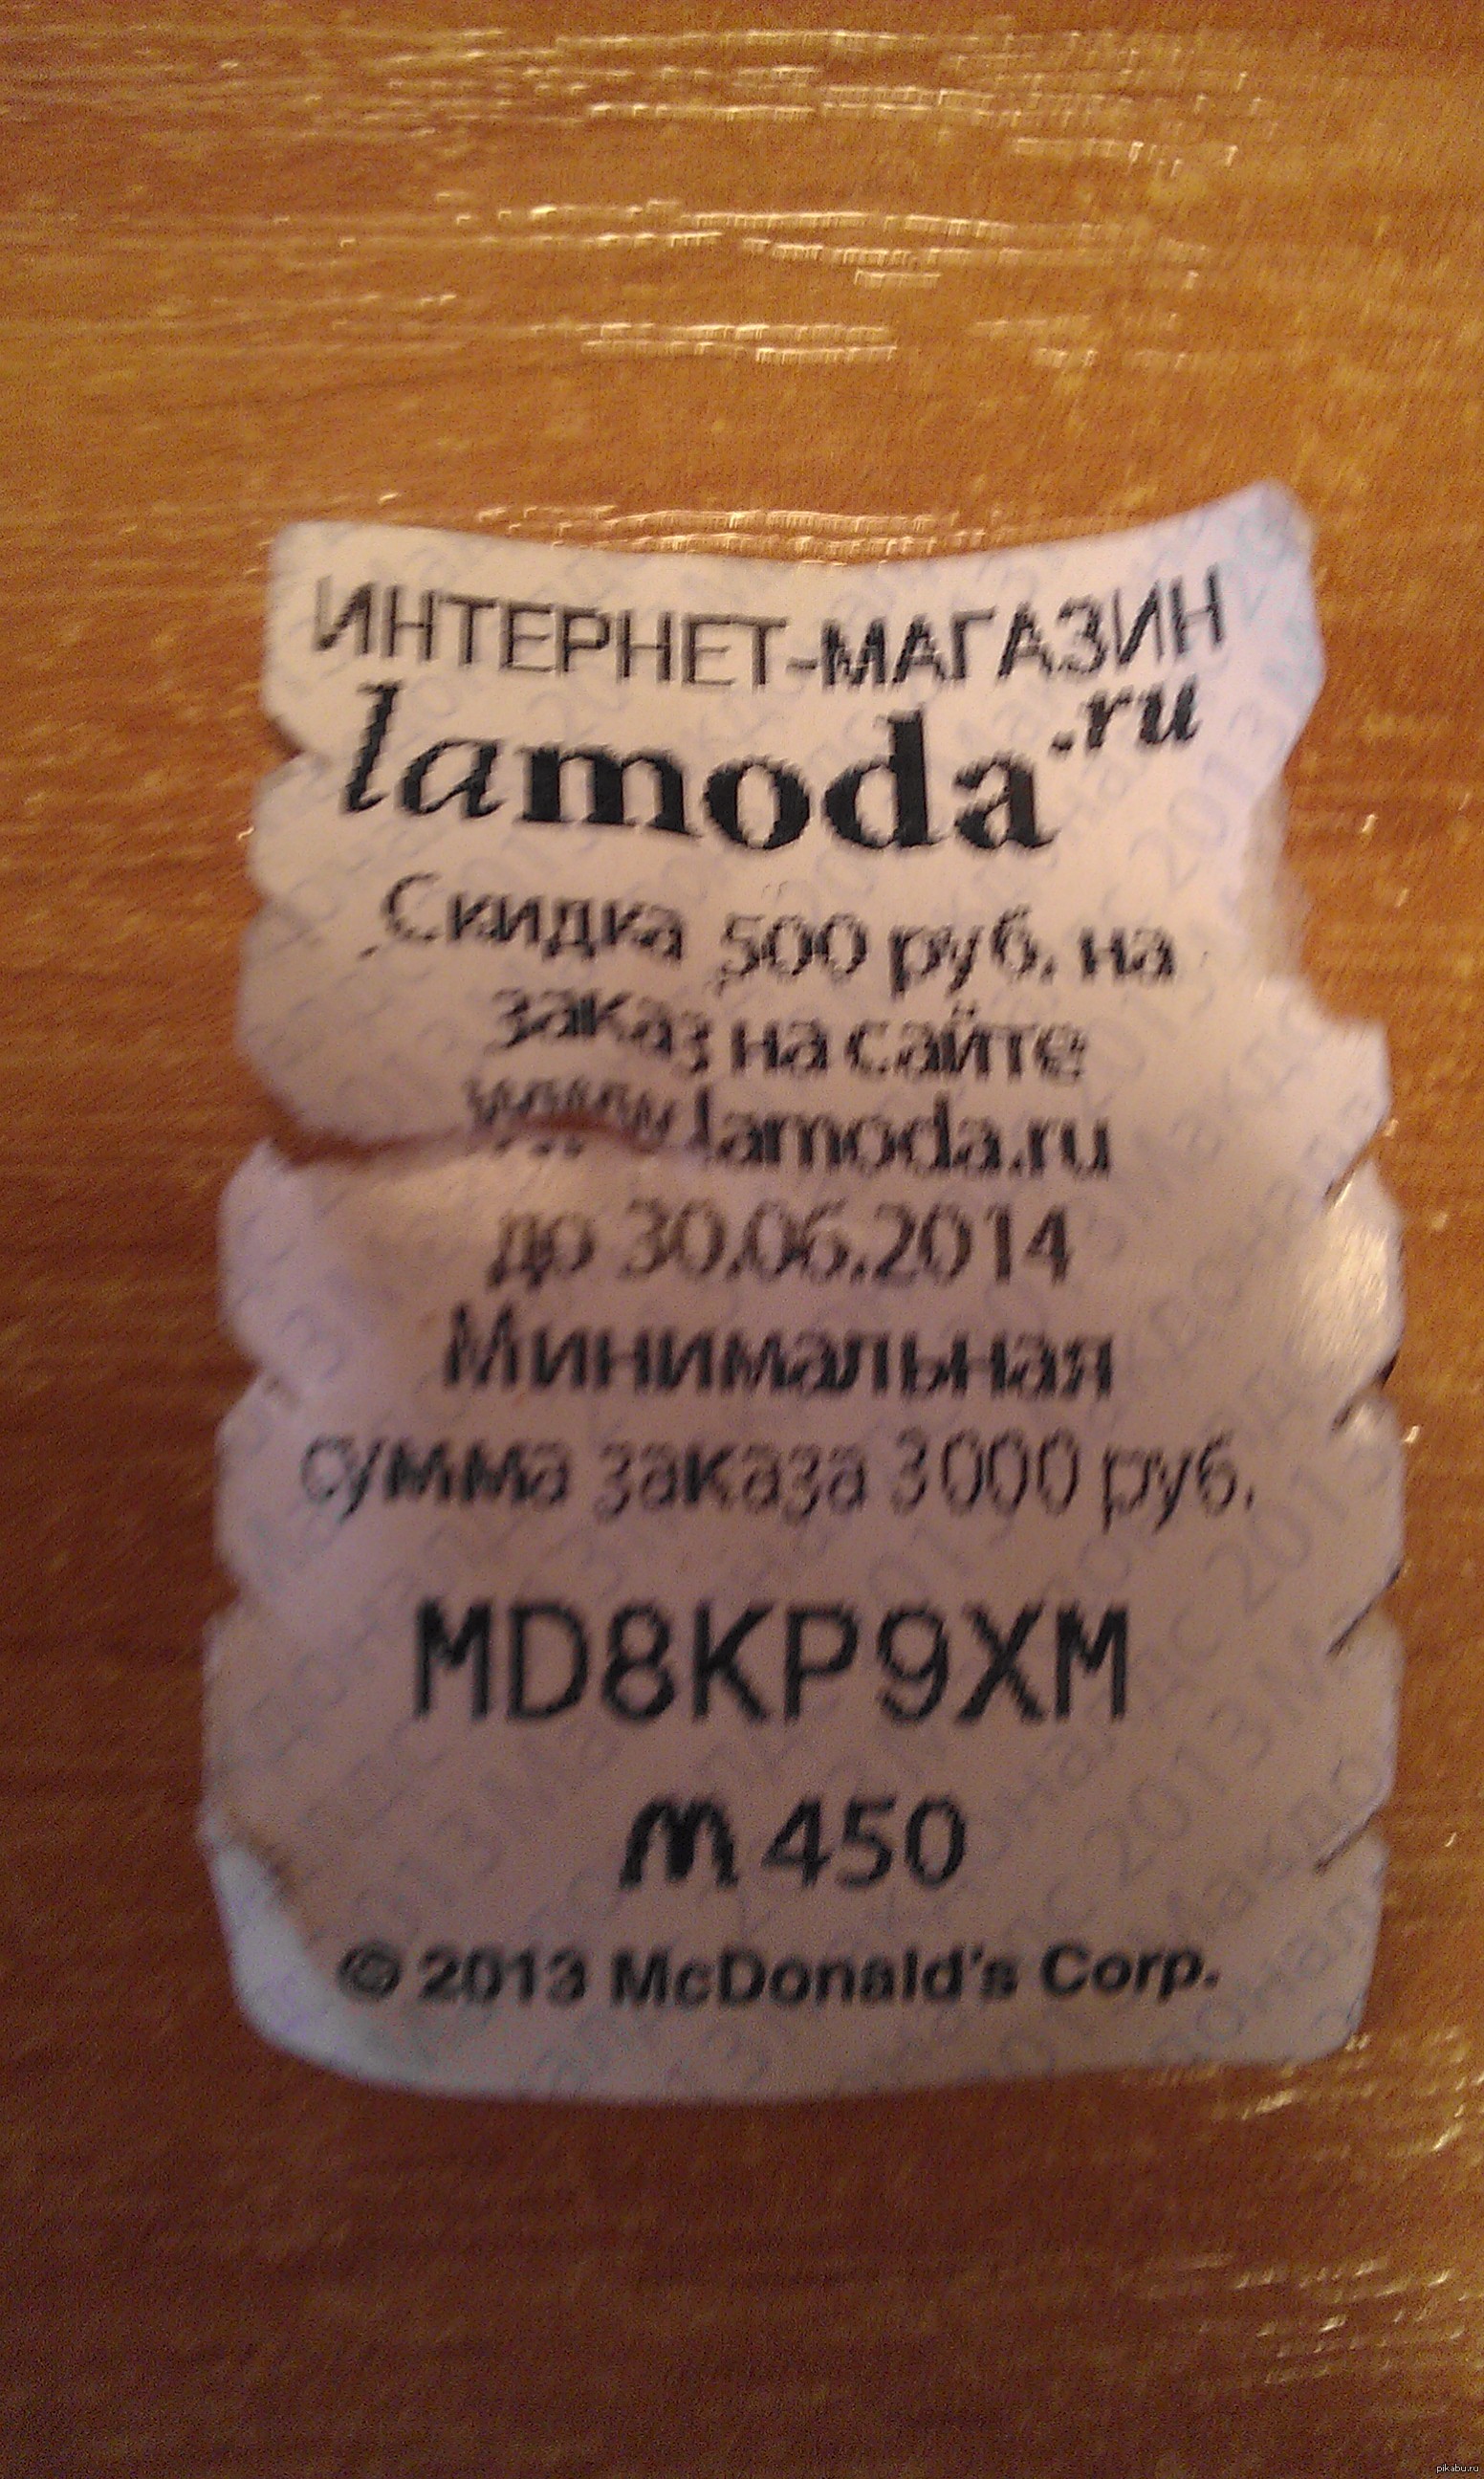   lamoda.ru  500      www.lamoda.ru    30.06.2014.   : 3000 .  MD8KP9XM